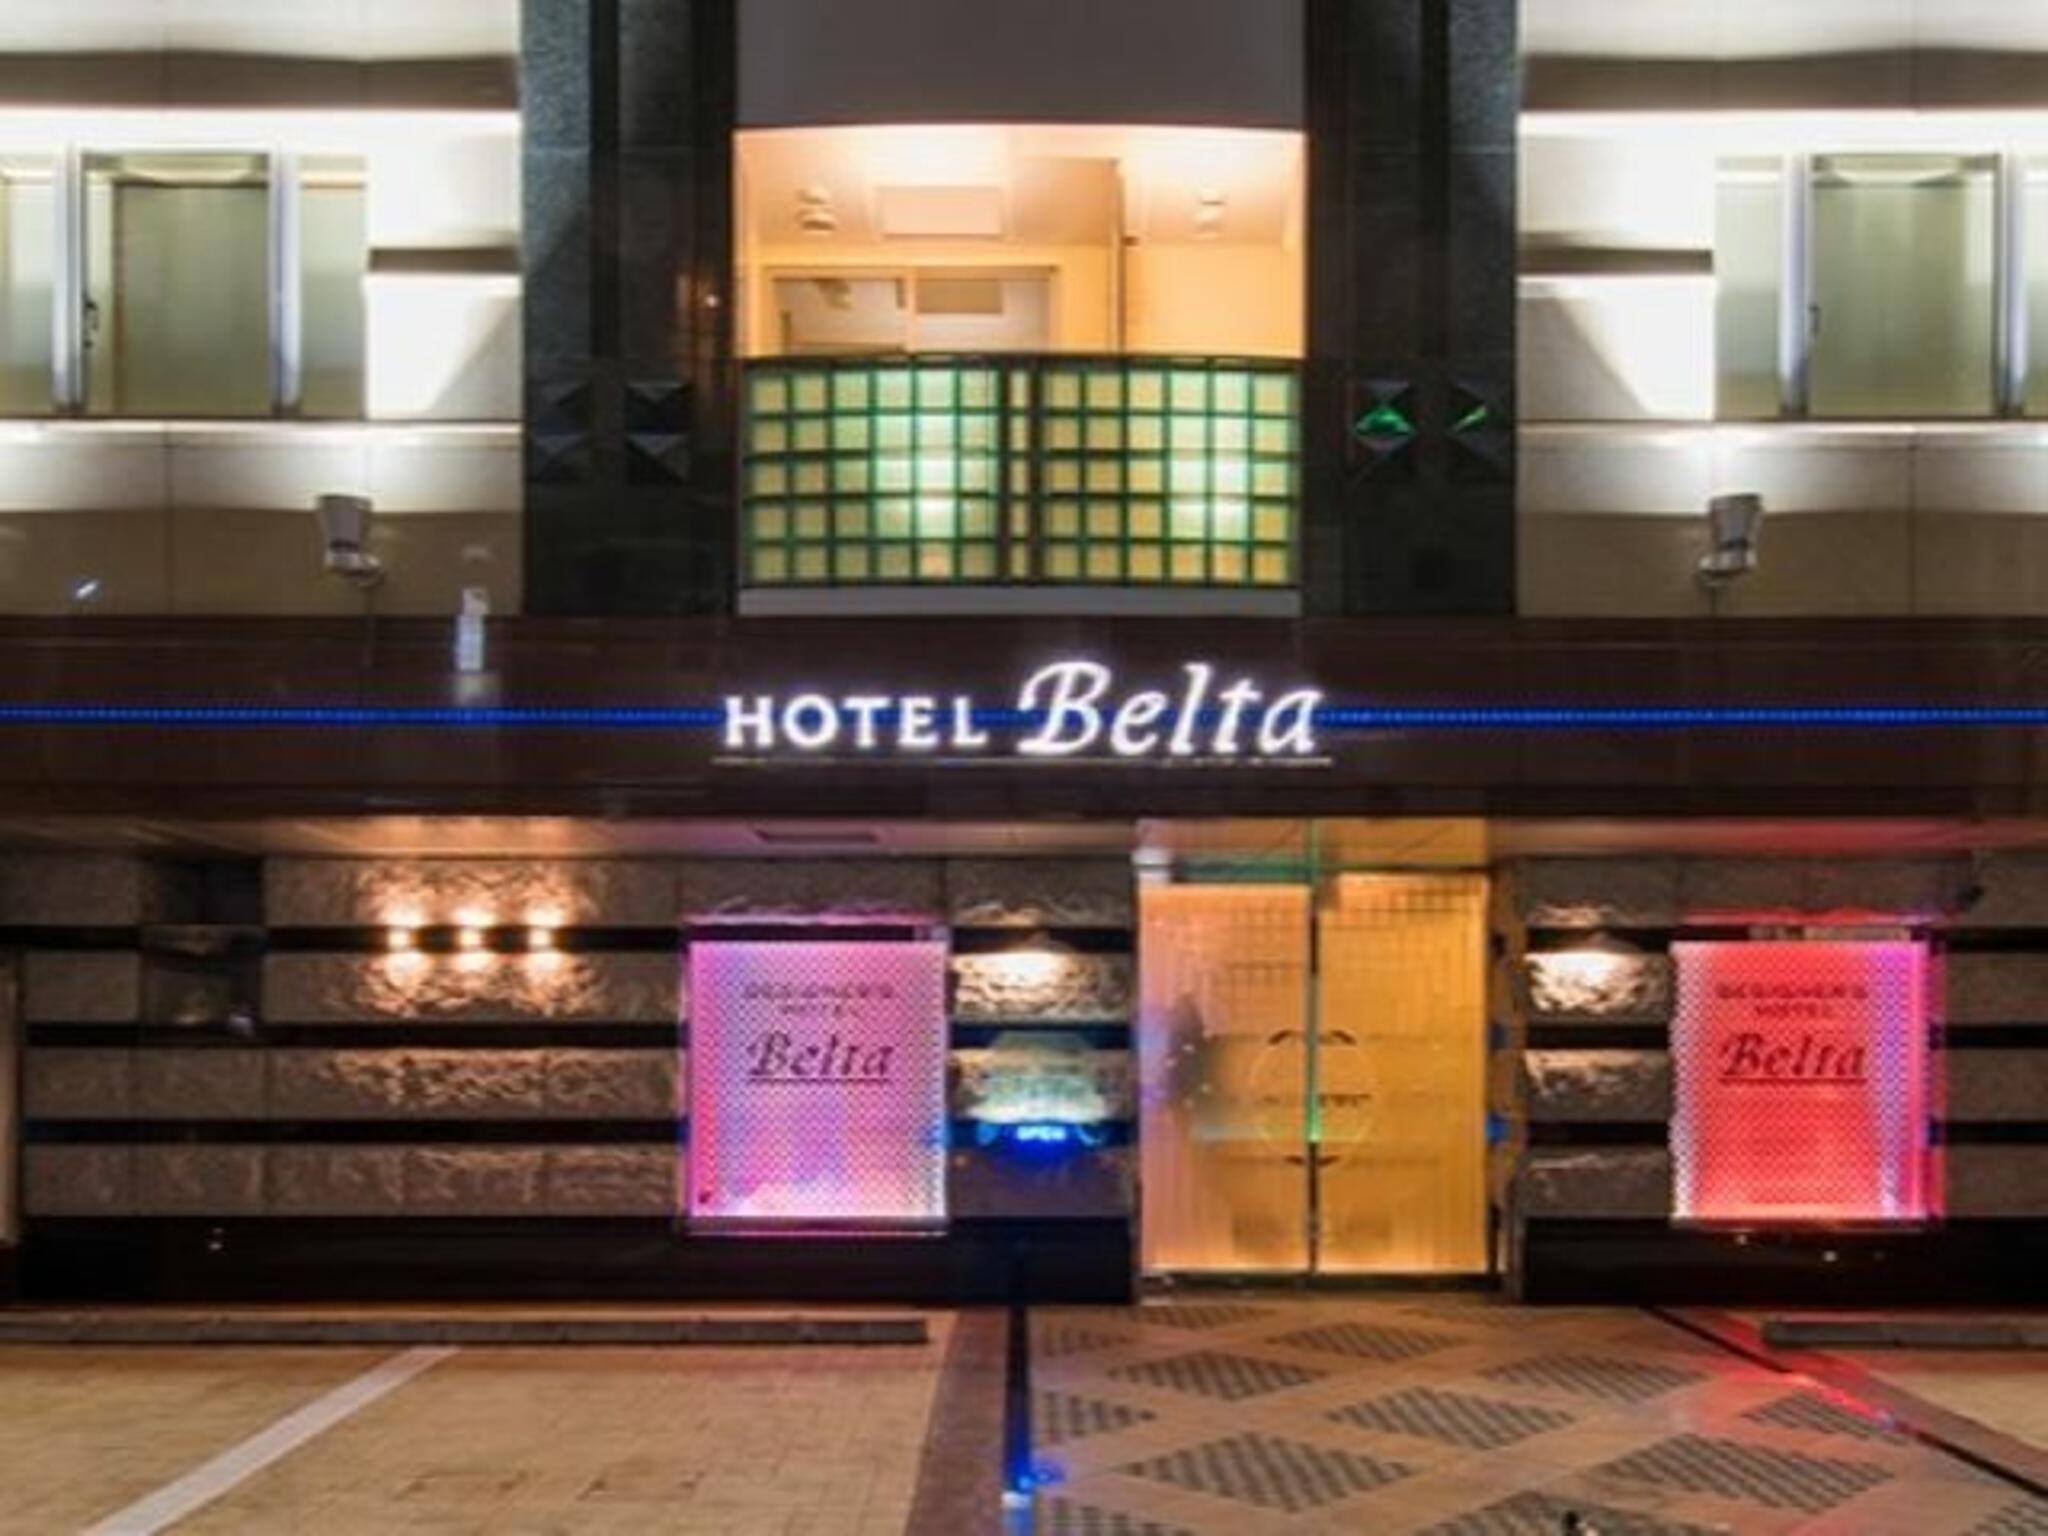 HOTEL Beltaの代表写真3